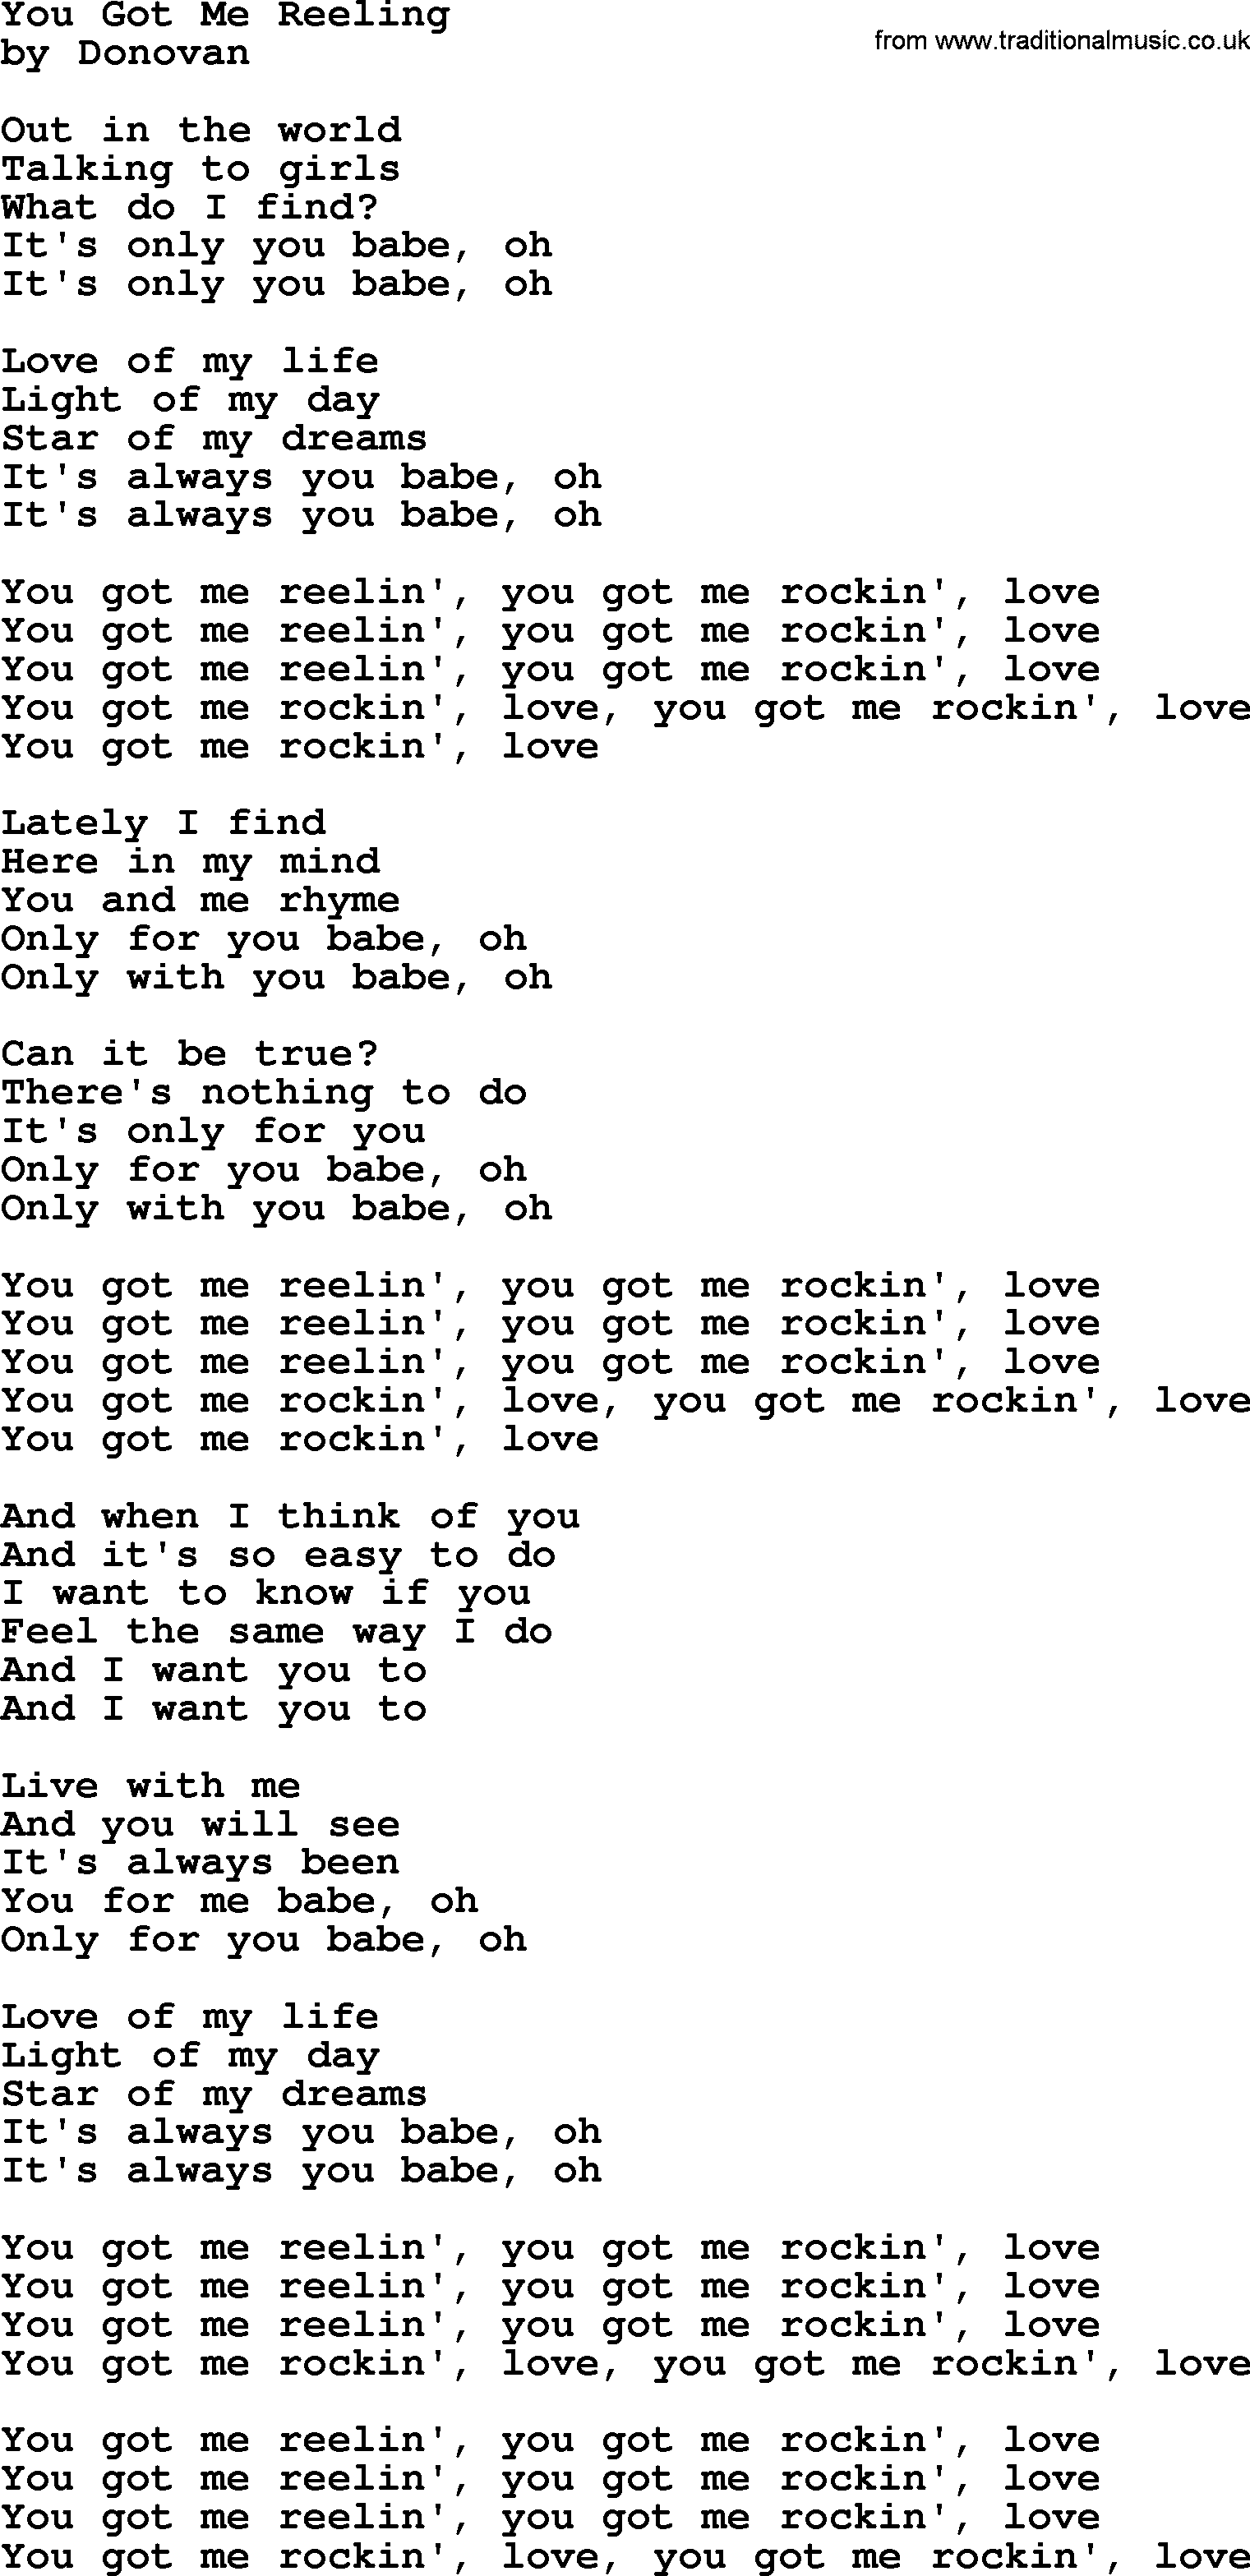 Donovan Leitch song: You Got Me Reeling lyrics